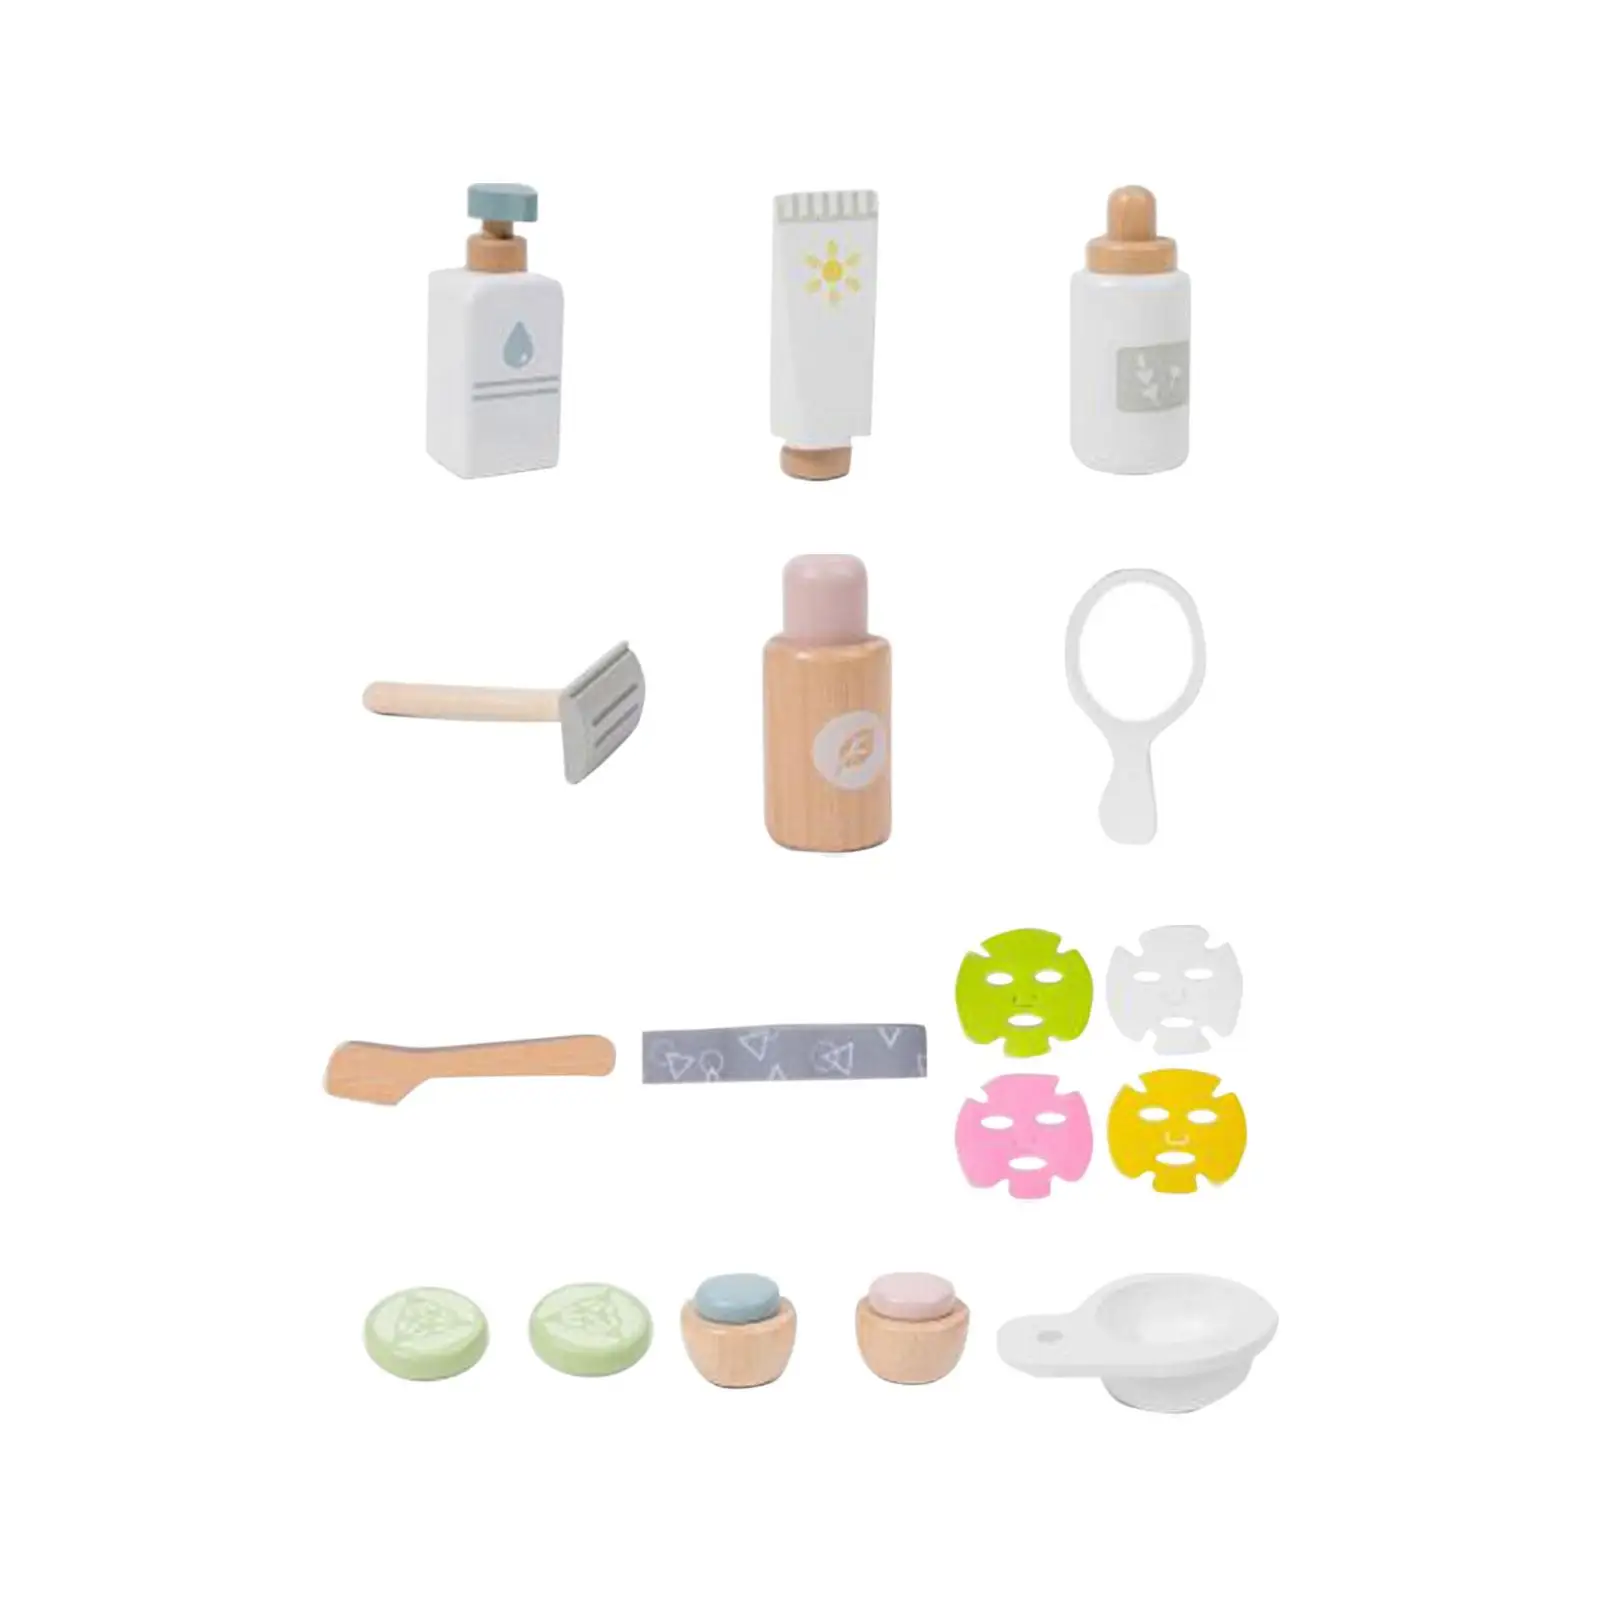 Makeup Toy Kits Pretend Play Makeup Beauty Set for Halloween Present Gift